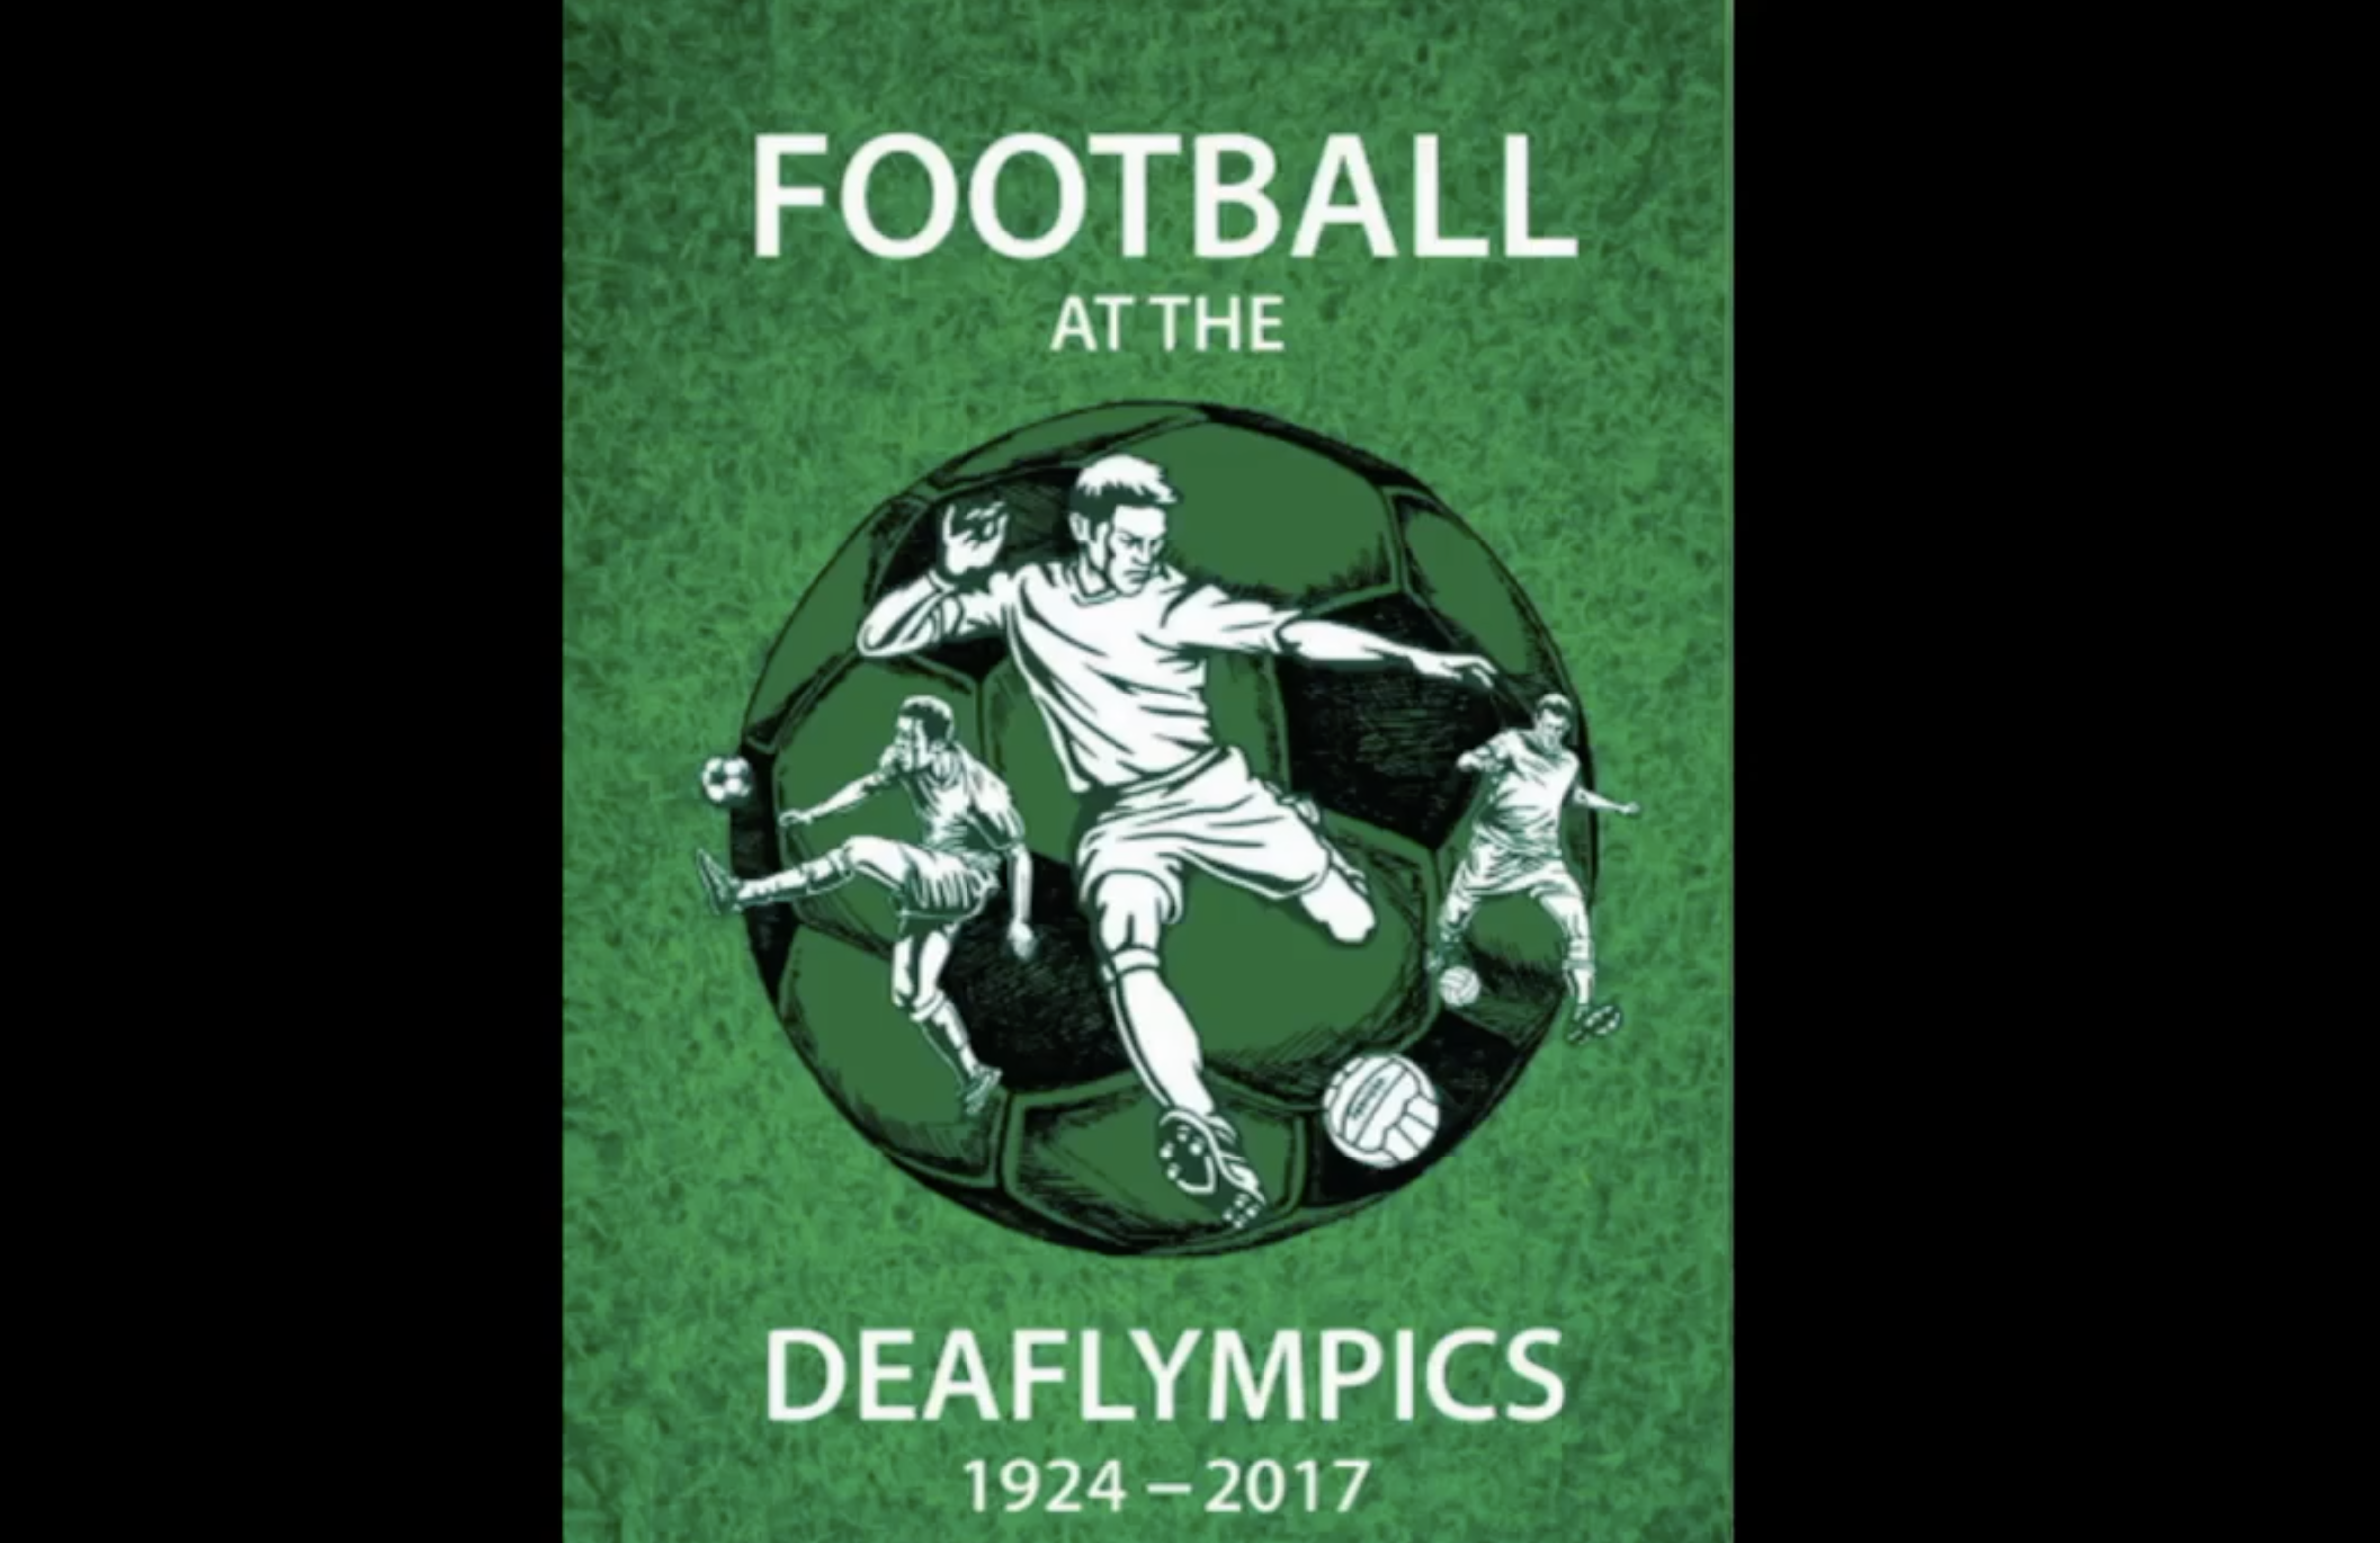 Great book on deaf football since 1924